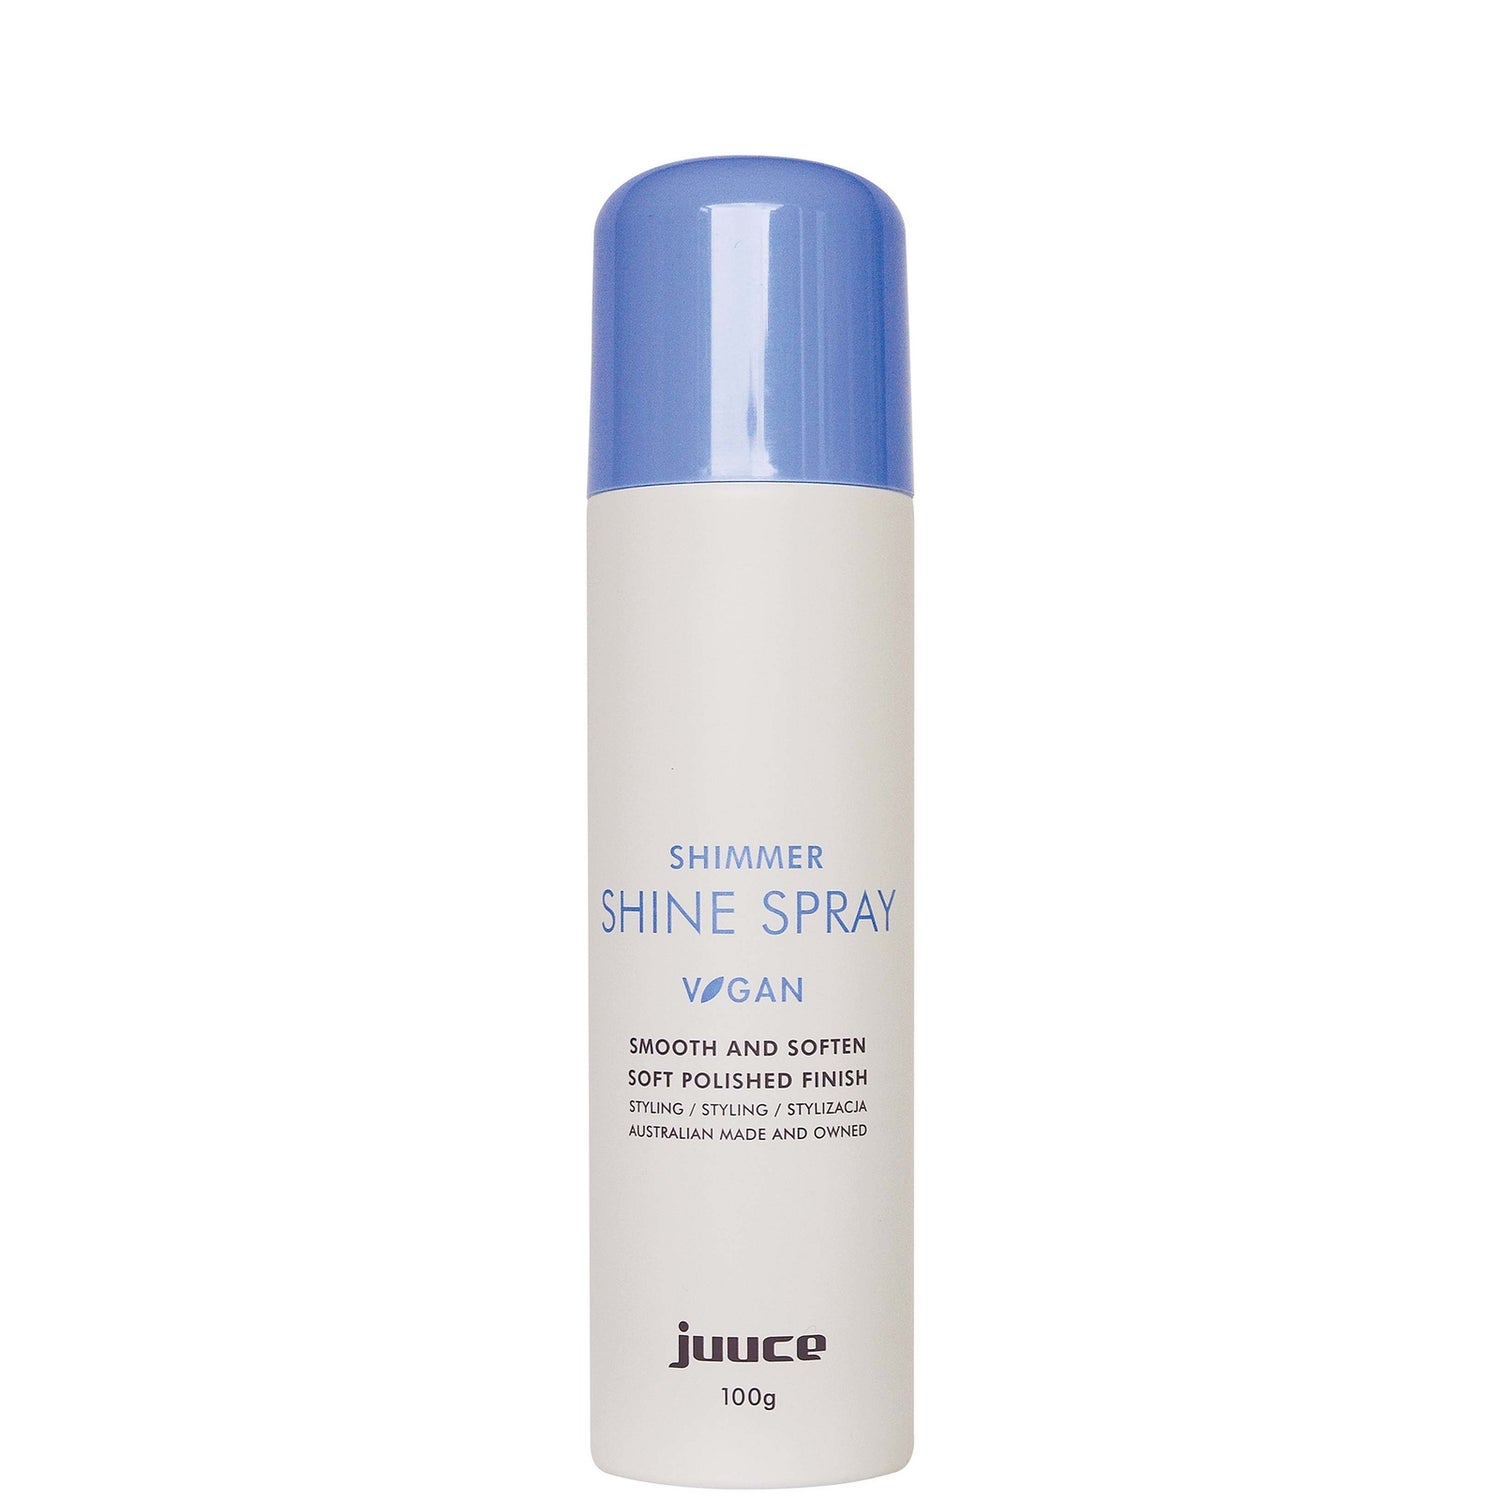 Juuce Shimmer Shine Spray 100g